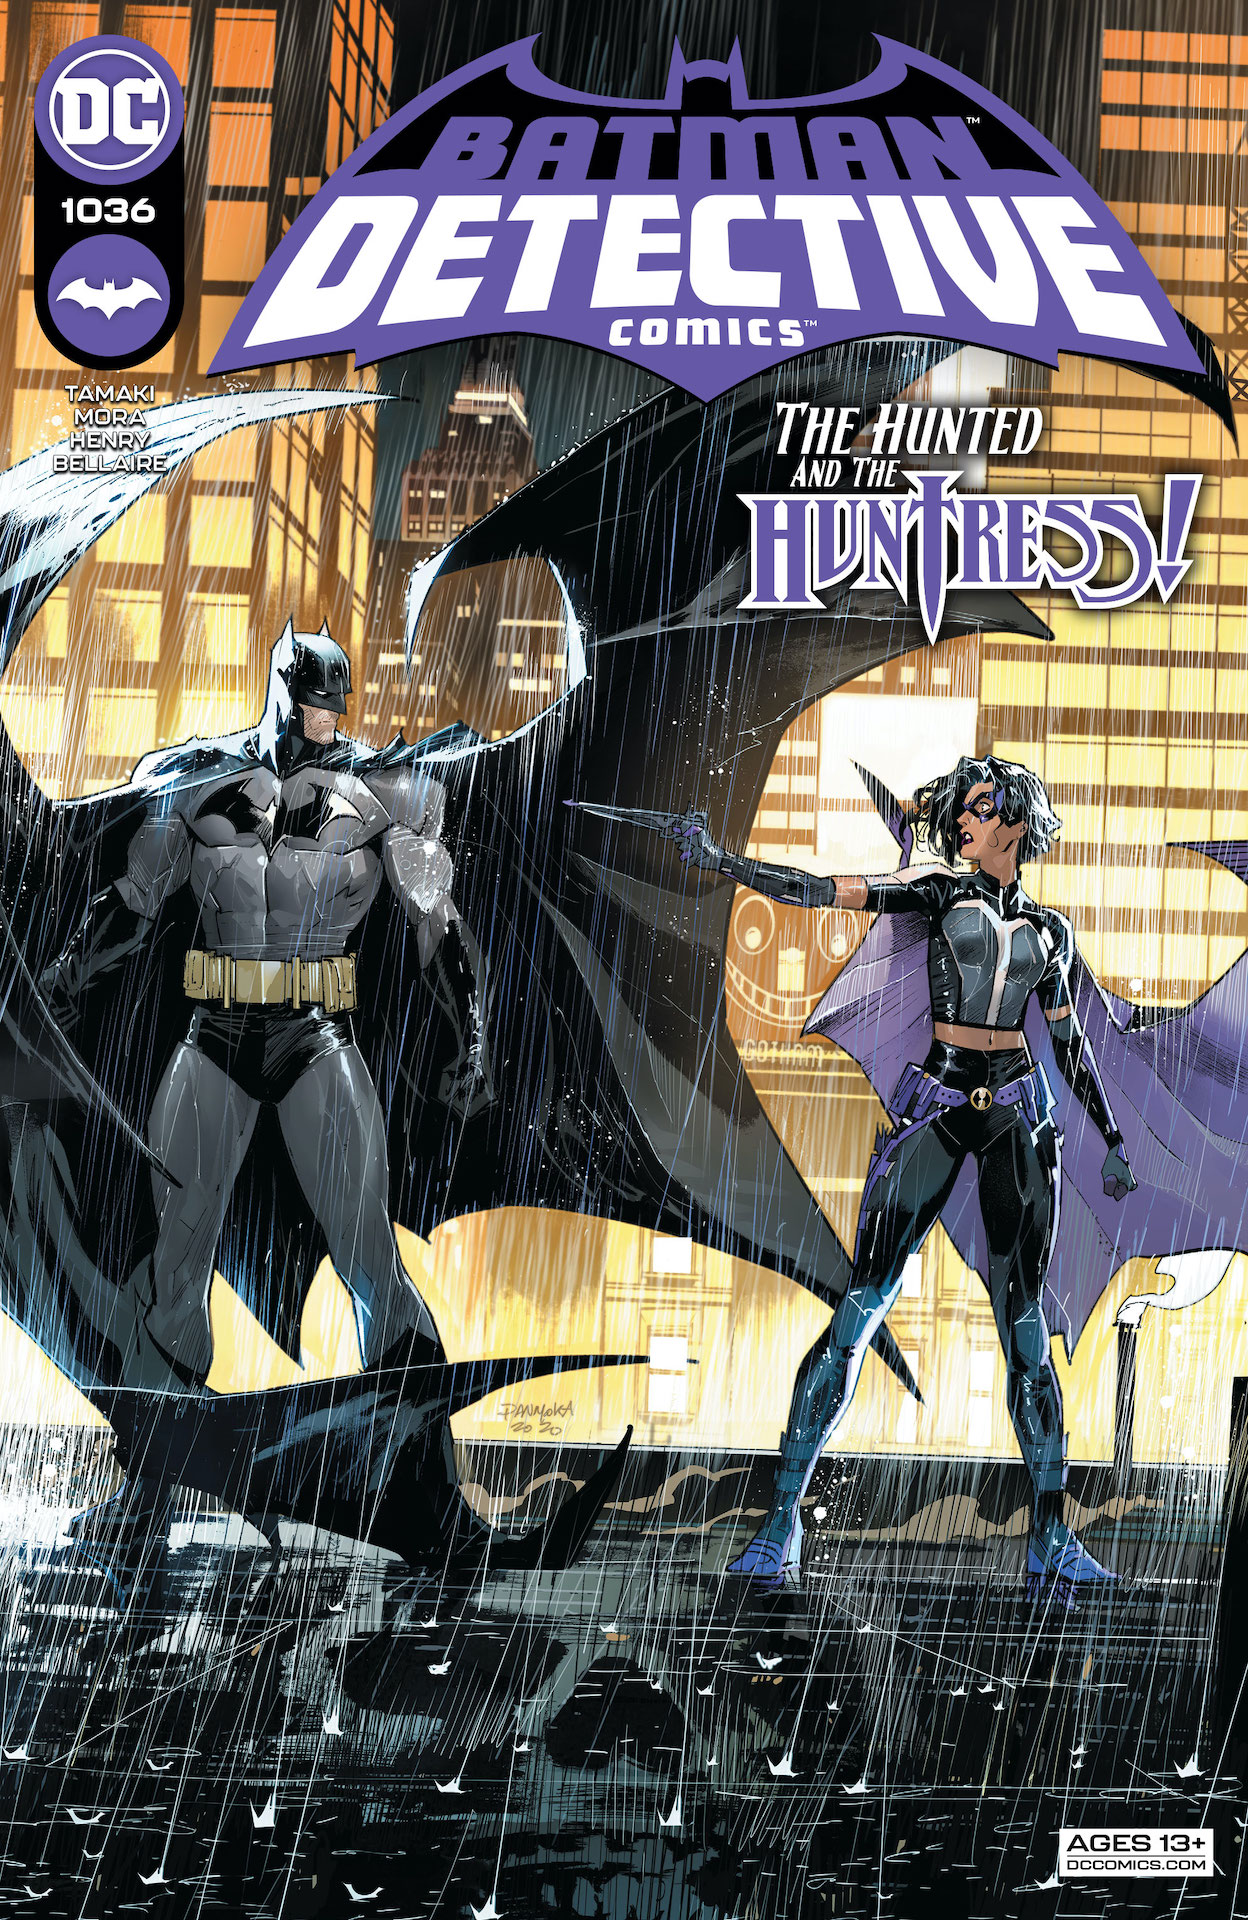 DC Preview: Detective Comics #1036